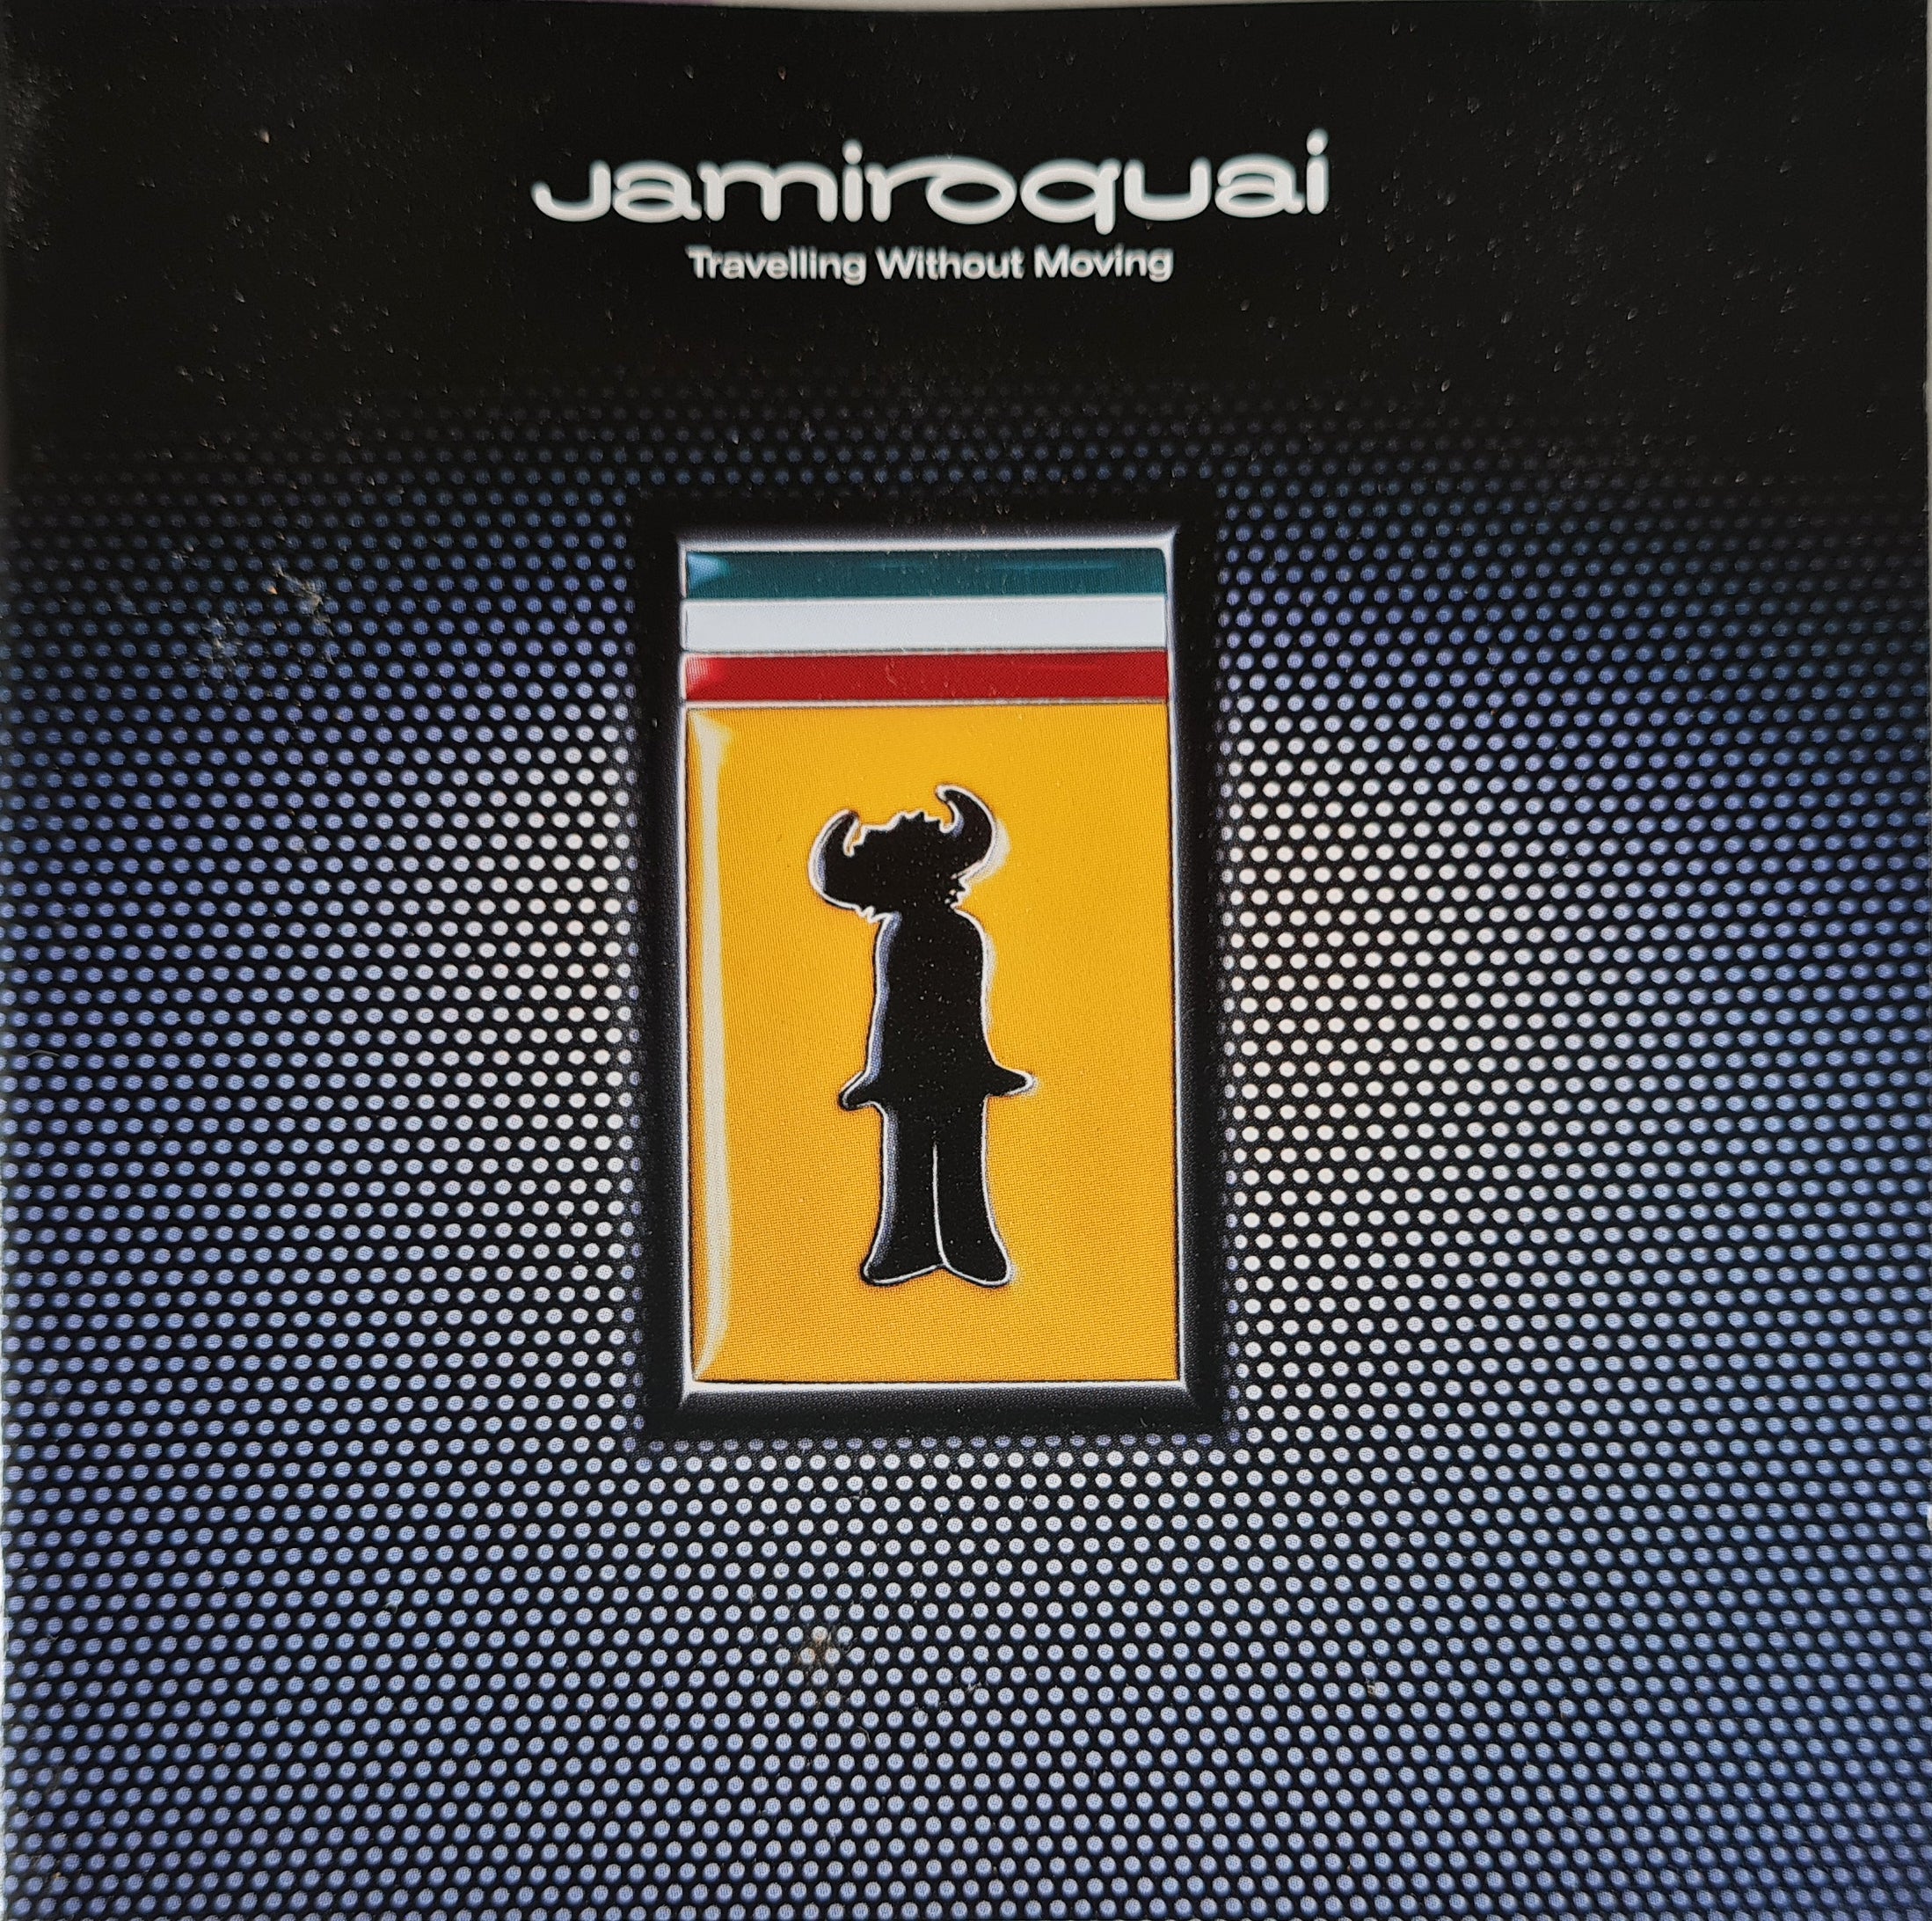 Jamiroquai - Travelling without Moving (CD)